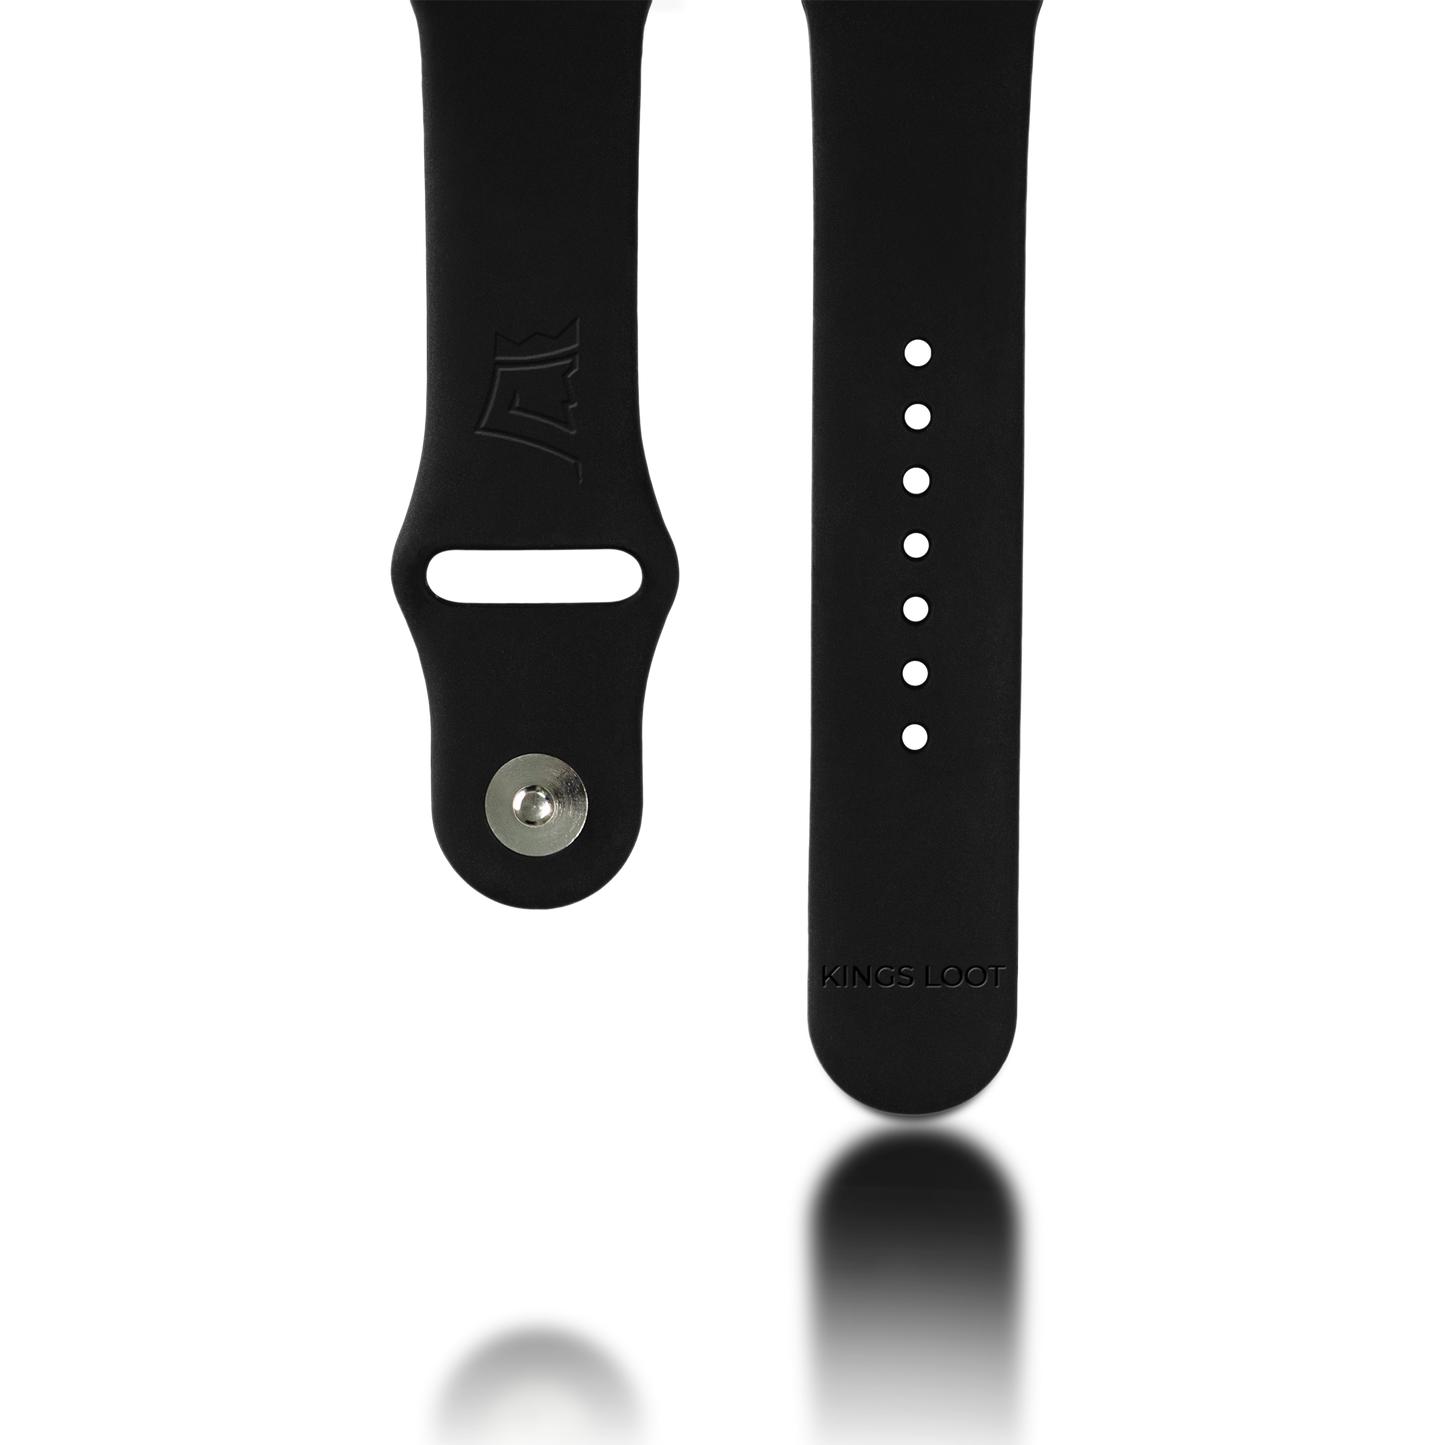 Black / Large (42-45mm Apple Watch)